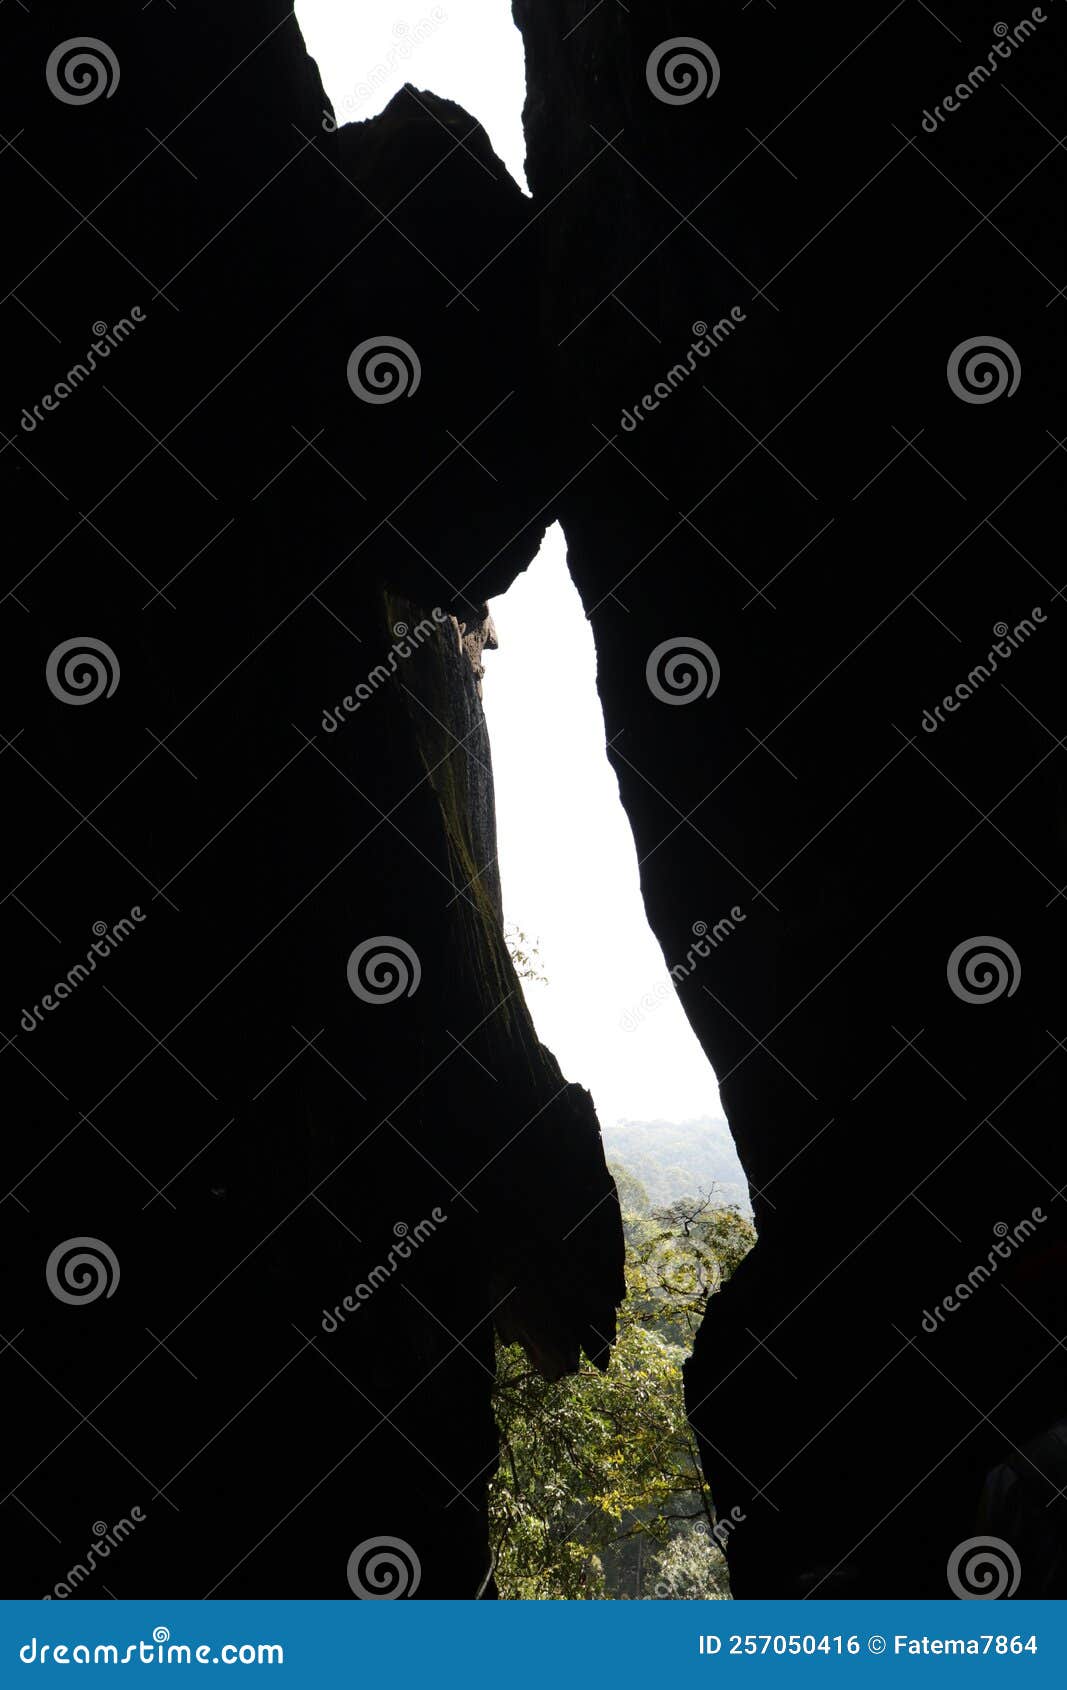 opening showing sky and trees from inside yana caves - karnataka tourism - india adventure trip - hindu mythology